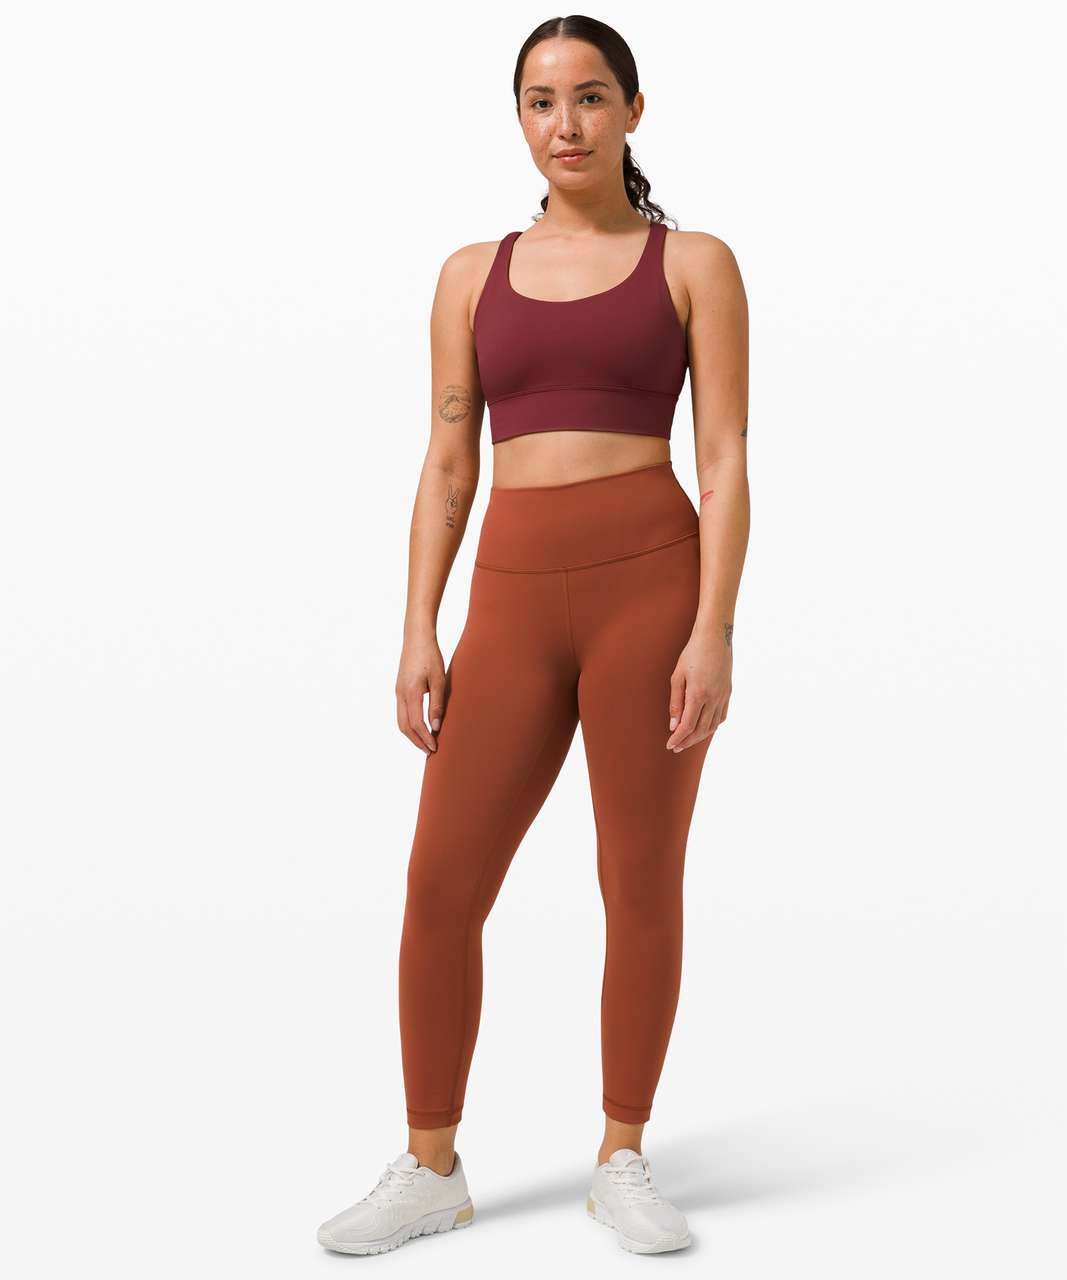 Alizarin Red Longline Sports Bra – BeYou Multiwear Designs LLC